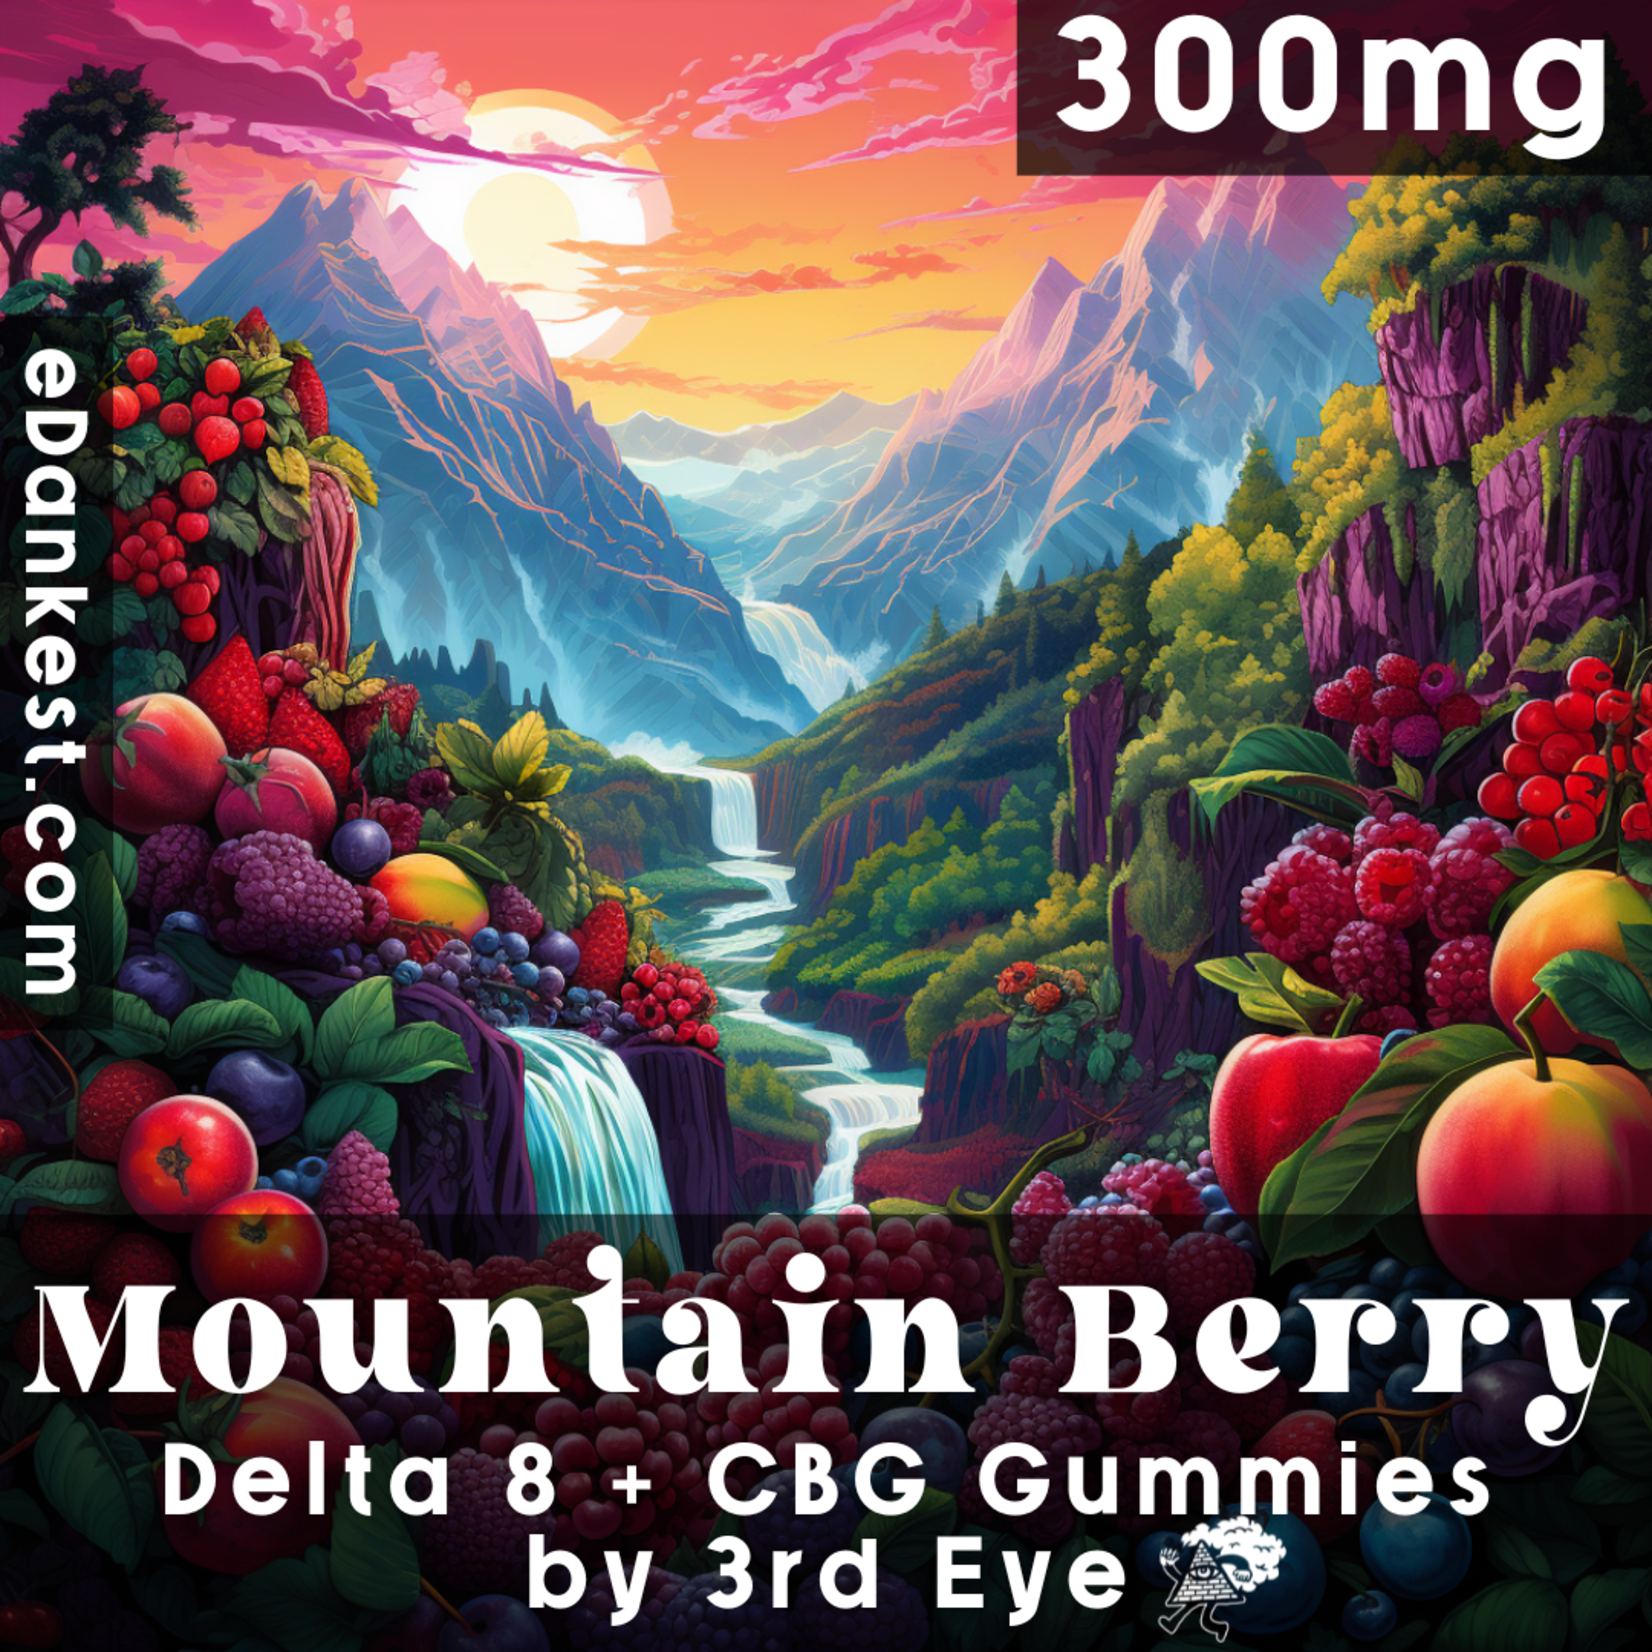 3rd Eye 3rd Eye Delta 8 + CBG Gummies - Mountain Berry